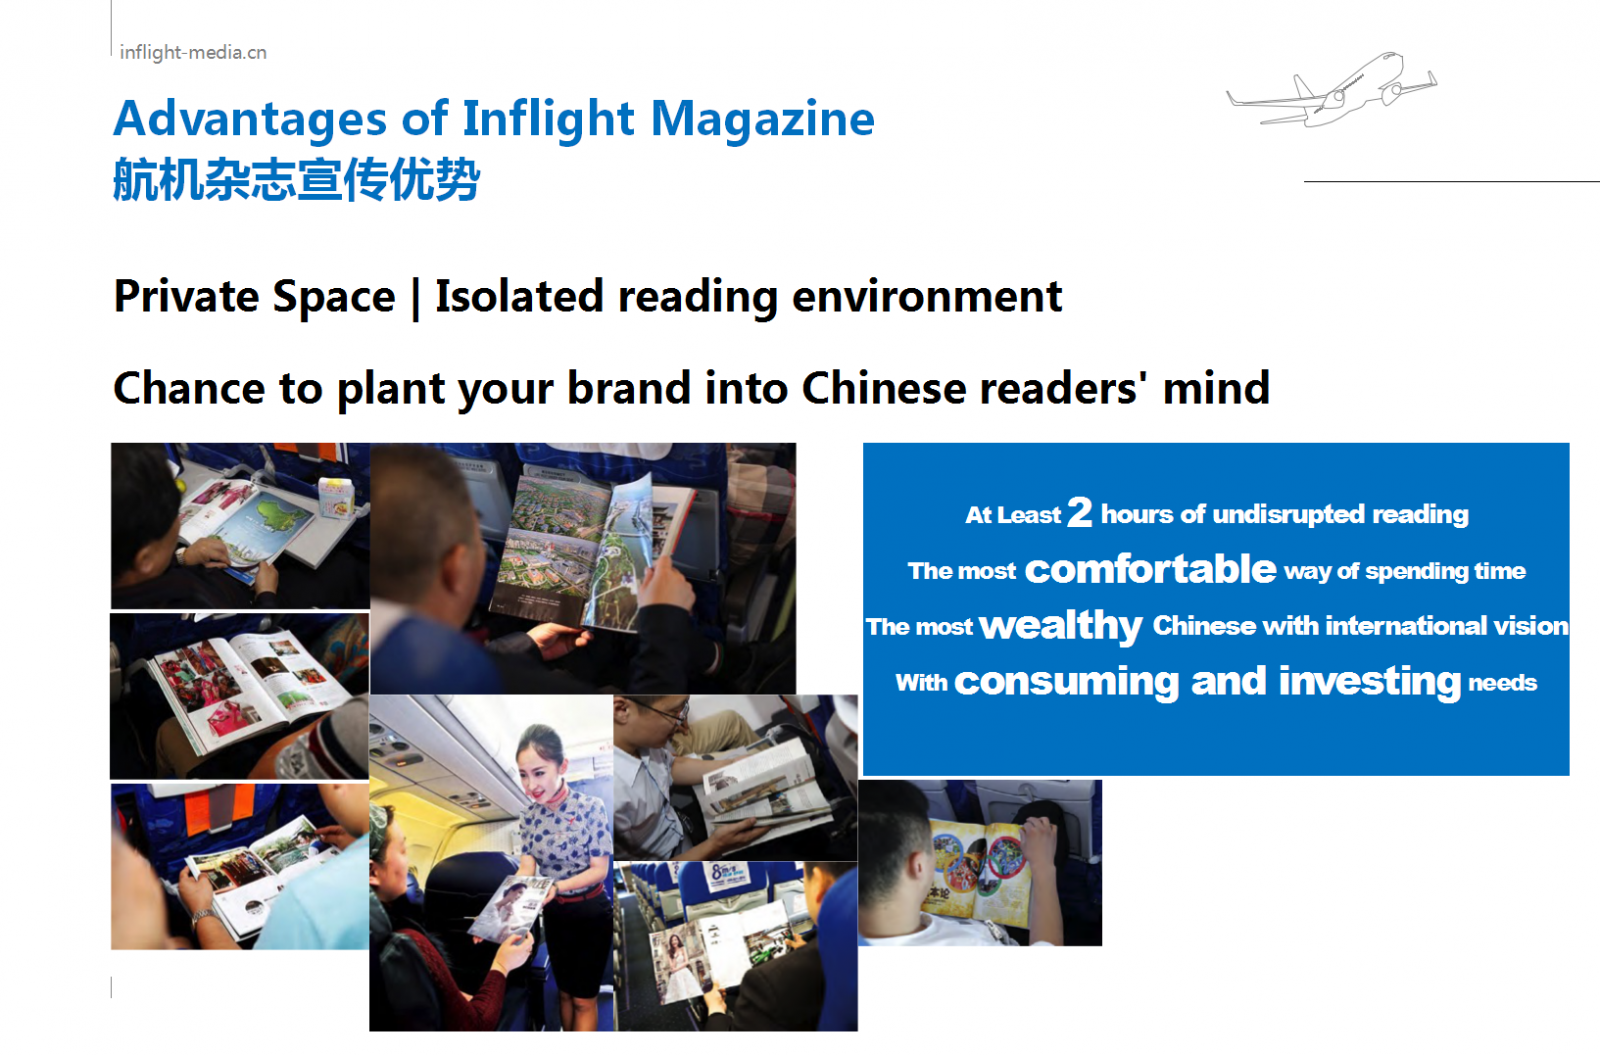 China's major inflight magazine